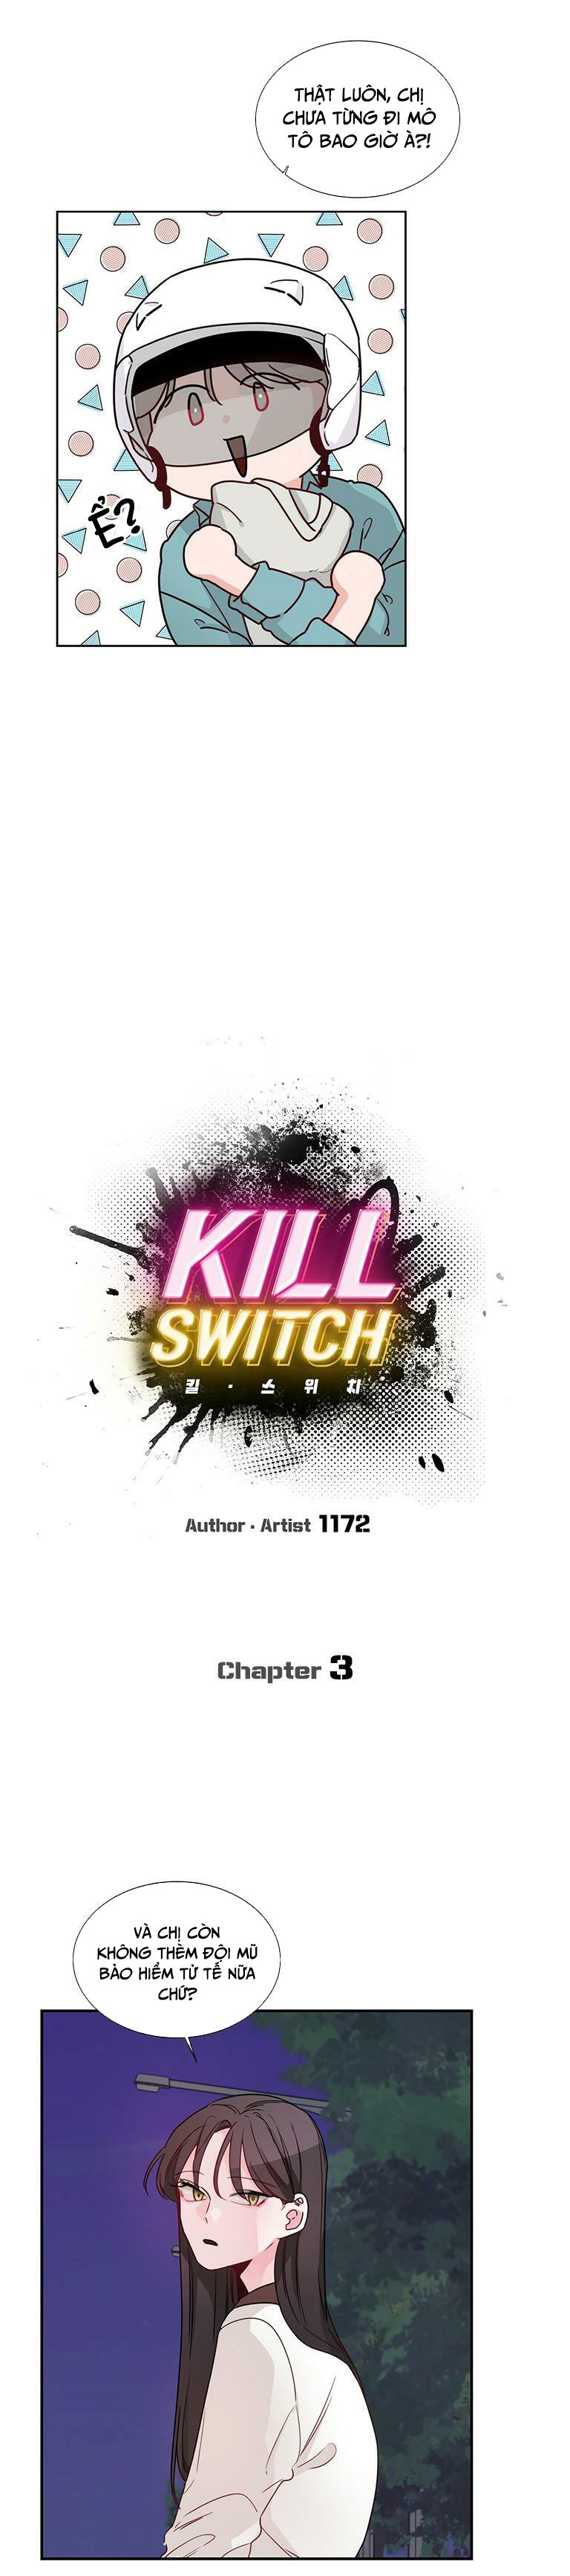 kill-switch-chap-3-2